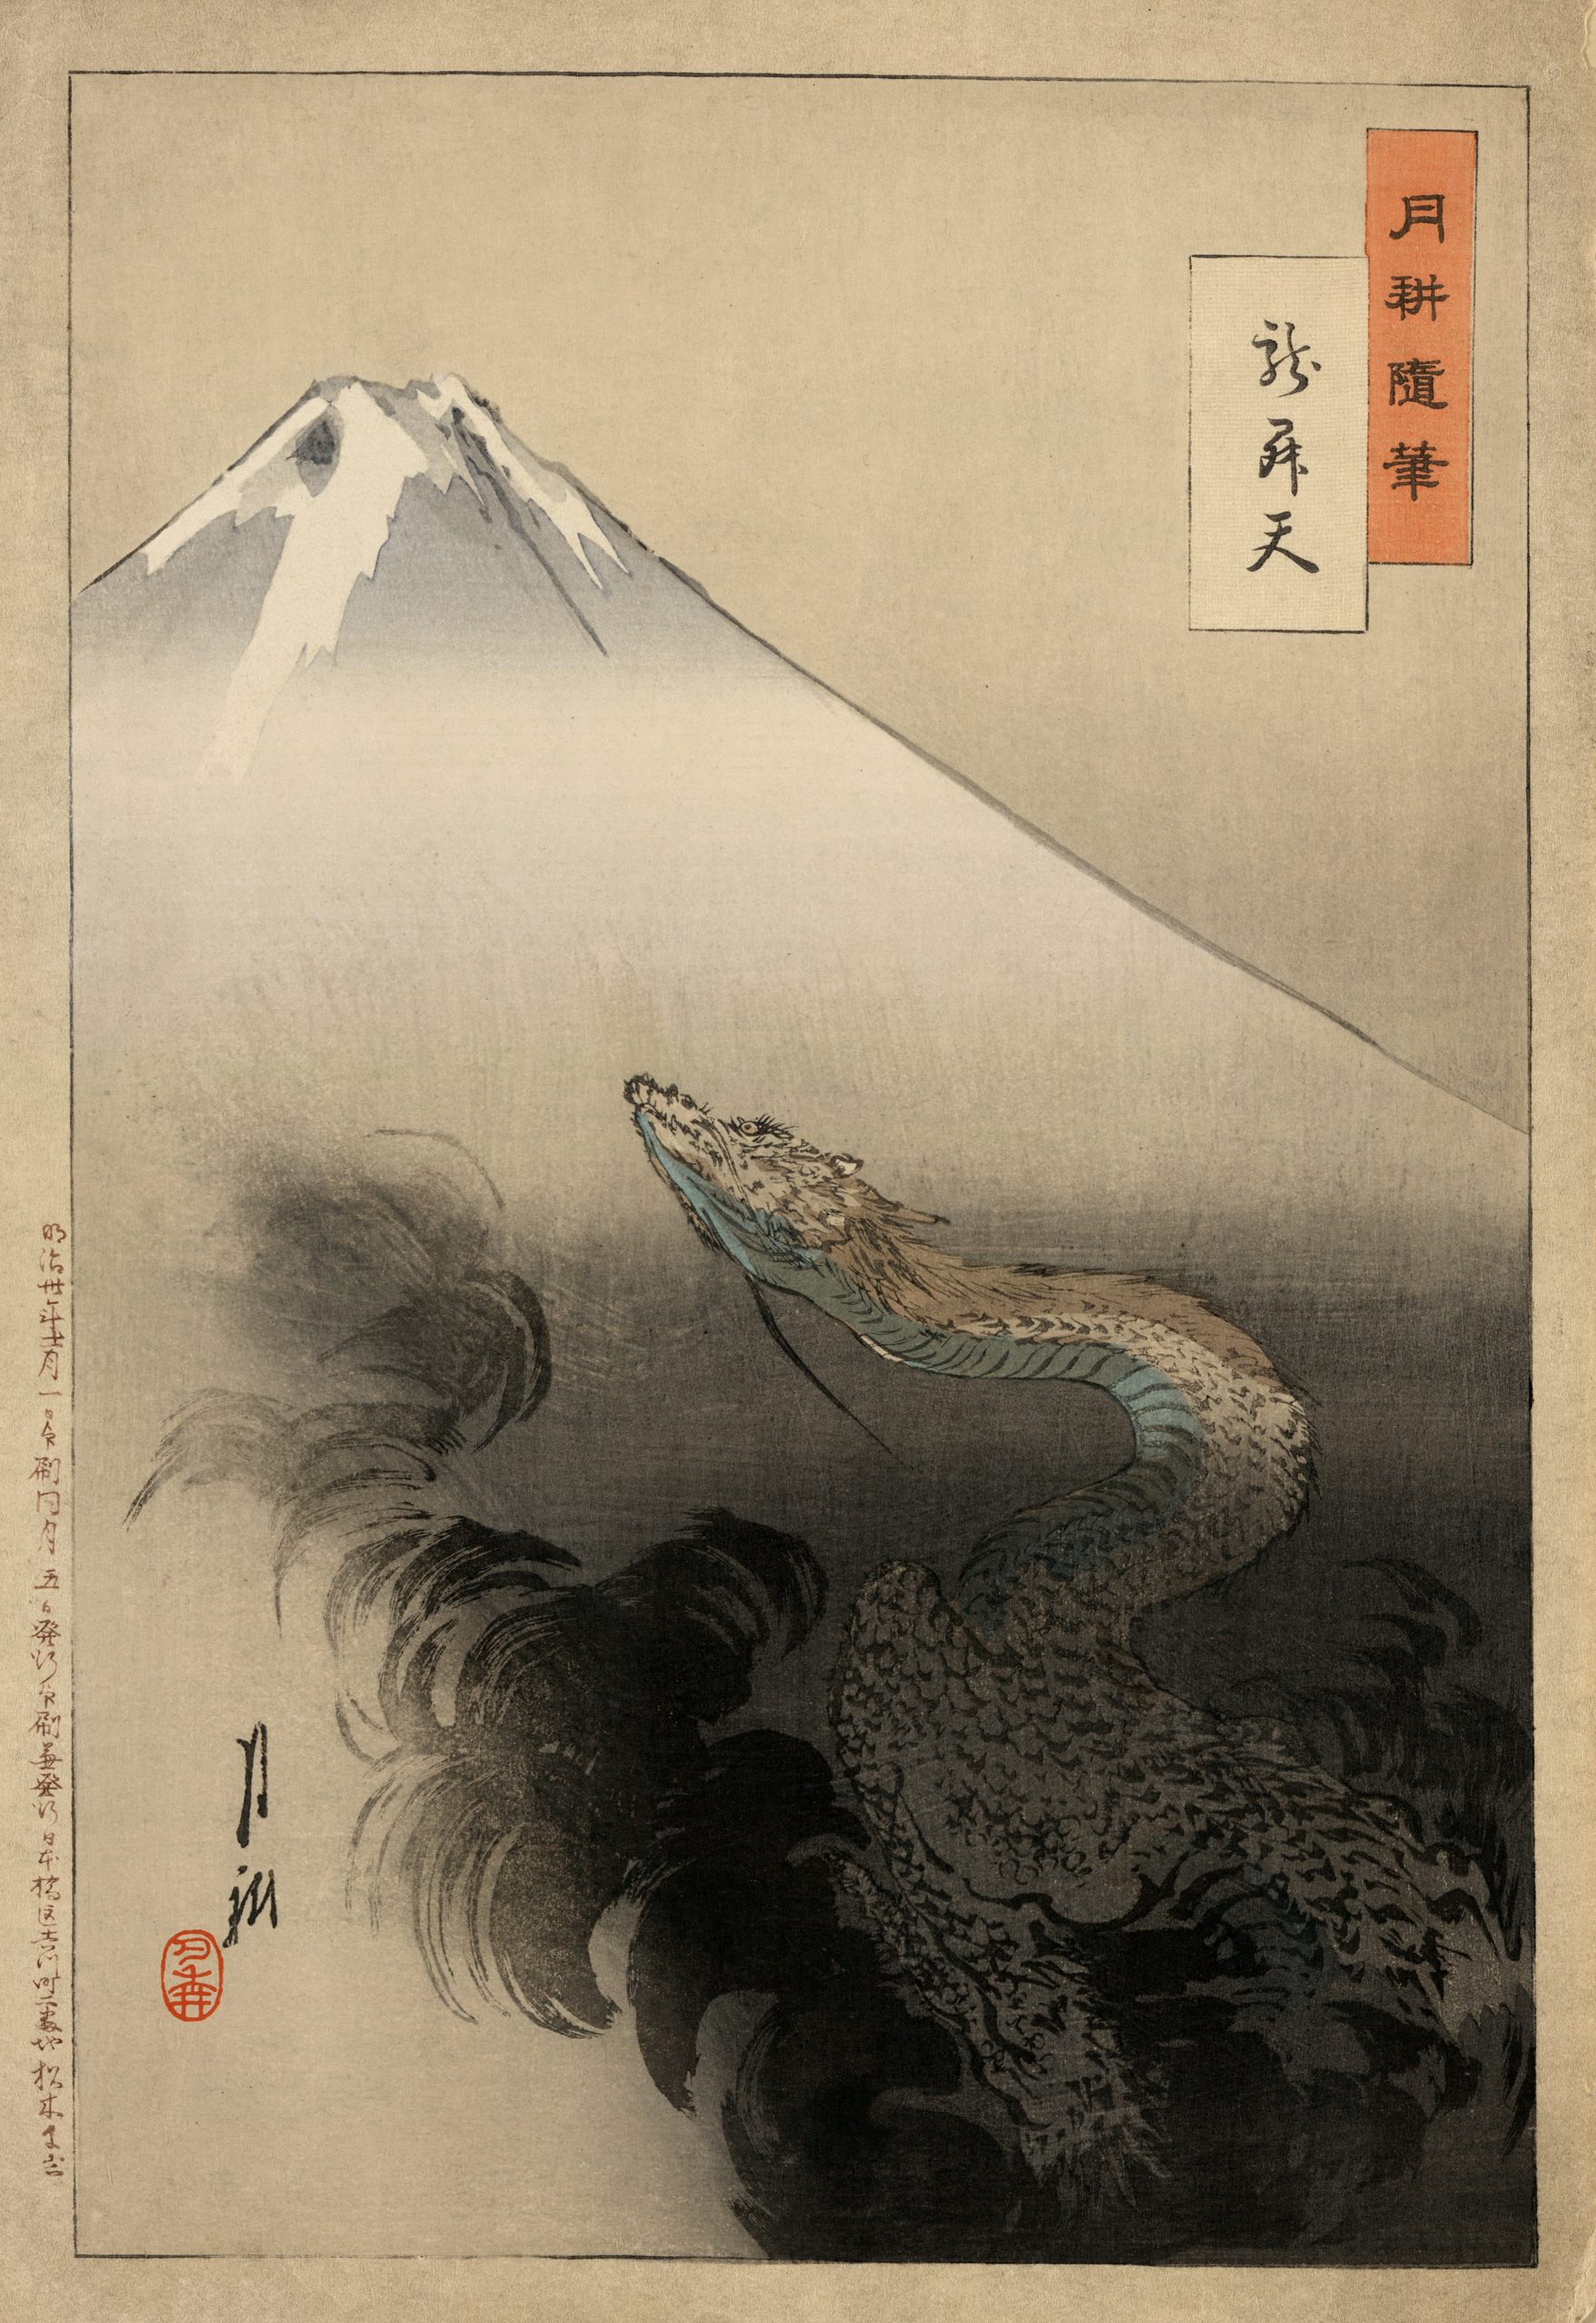 A mountain fades into the image of a dragon.